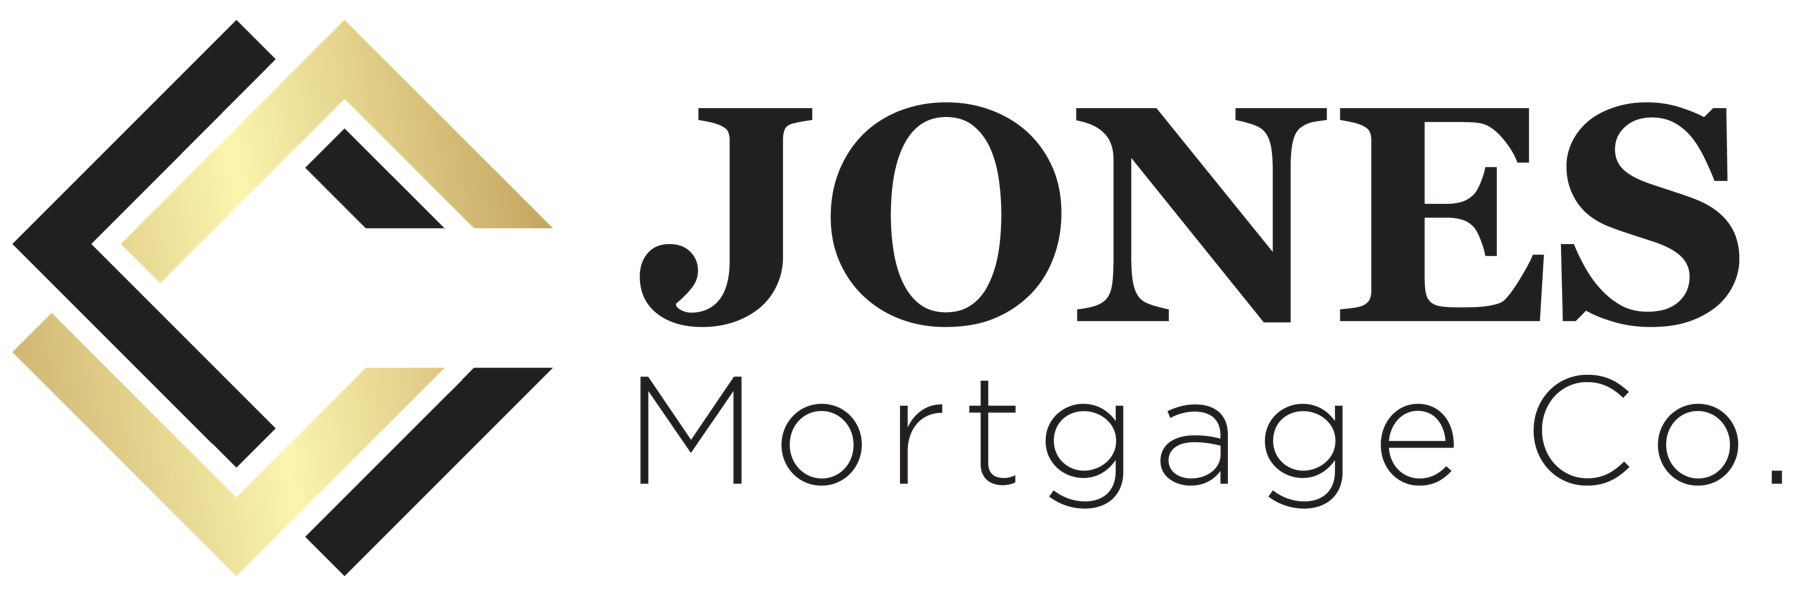 Jones Mortgage Co